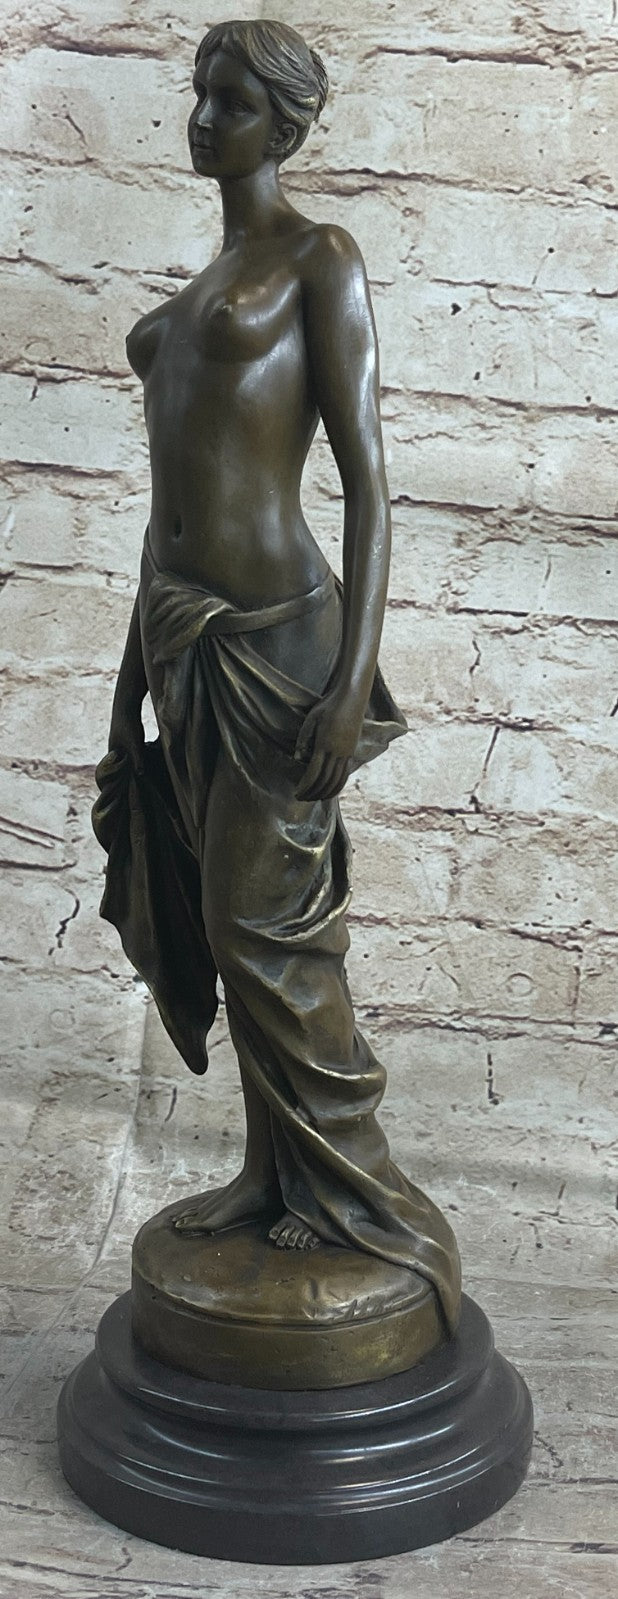 Hot Quality Nude Girl bronze Sculpture Handcrafted Statue Museum Gilt Deco Art